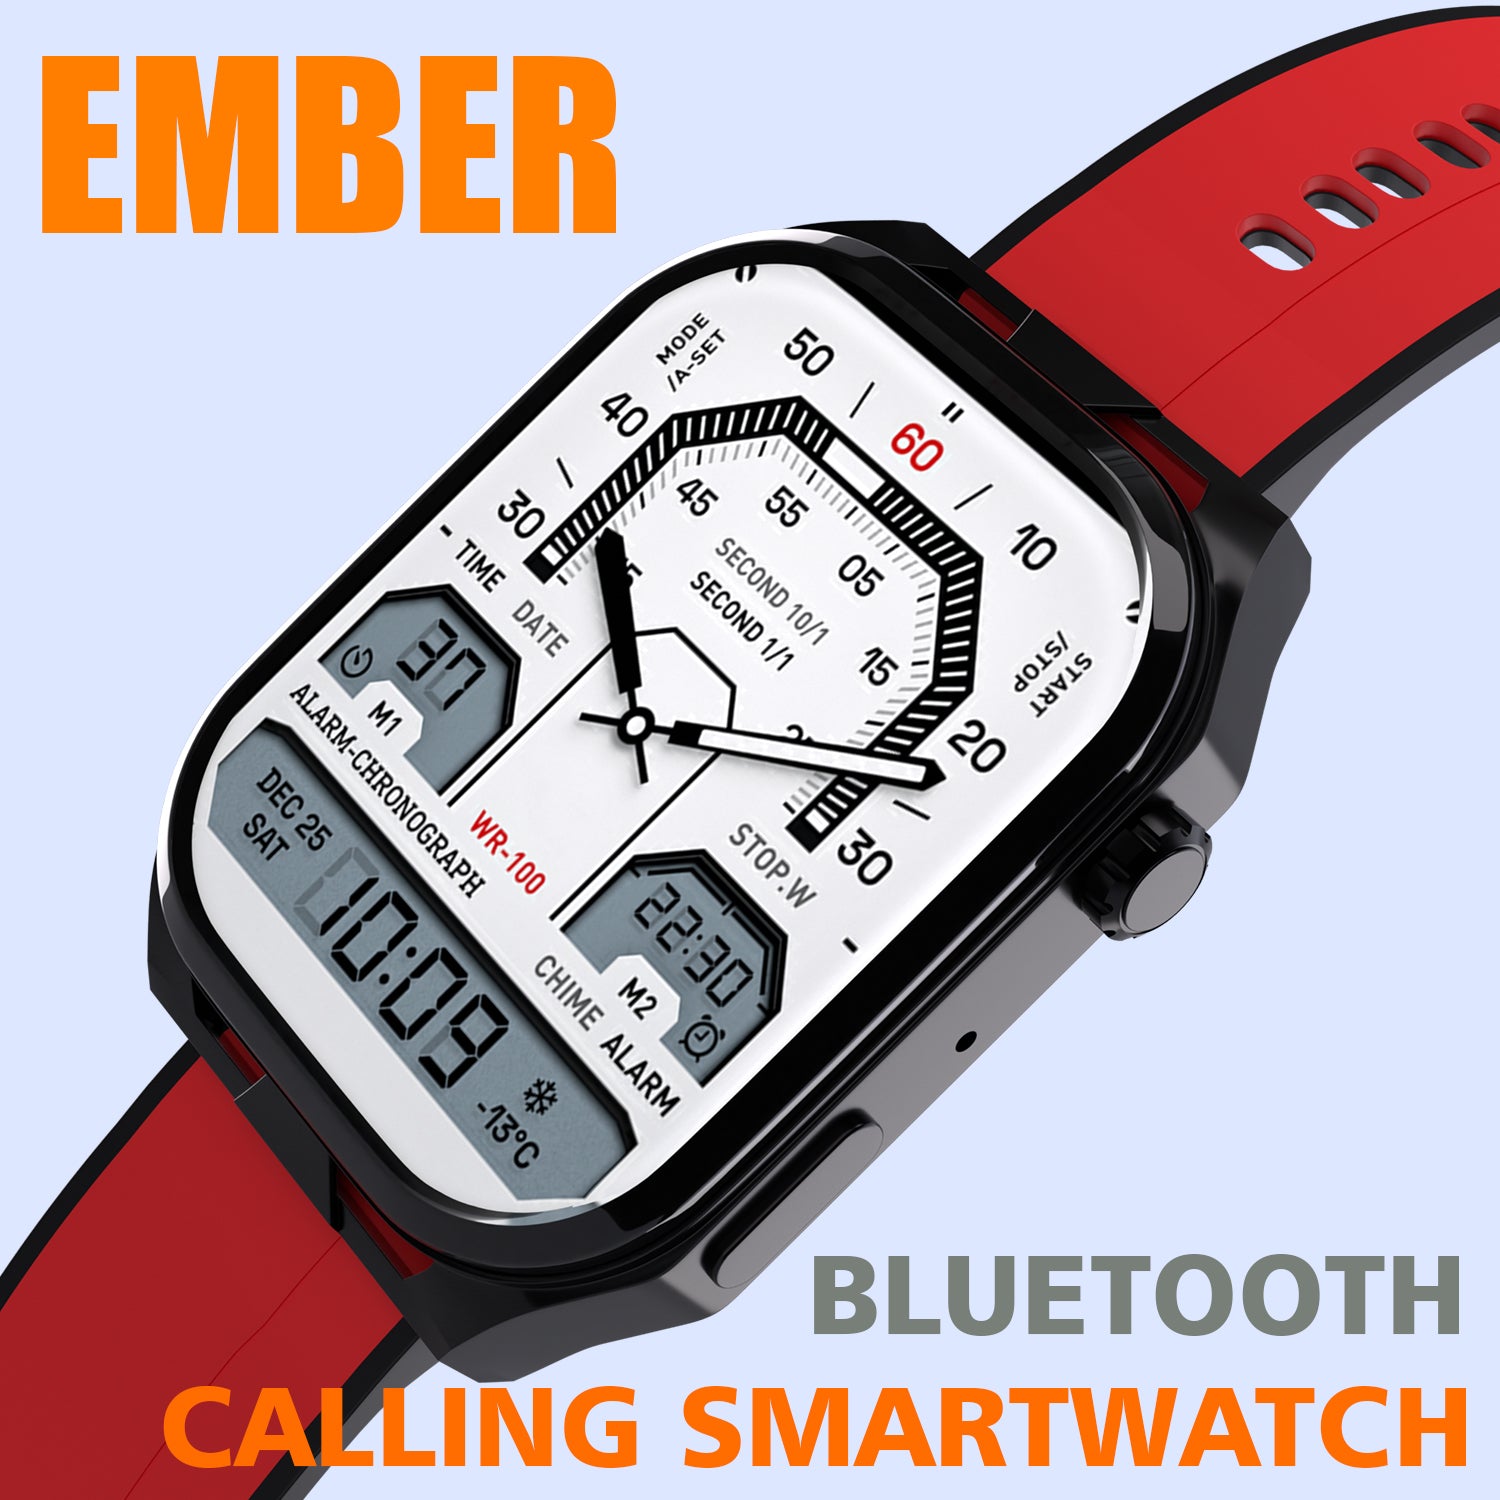 Unix USW-4 Ember Bluetooth Calling Smartwatch | 1.96" AMOLED Display, IP67 Waterproof, 6-Day Battery